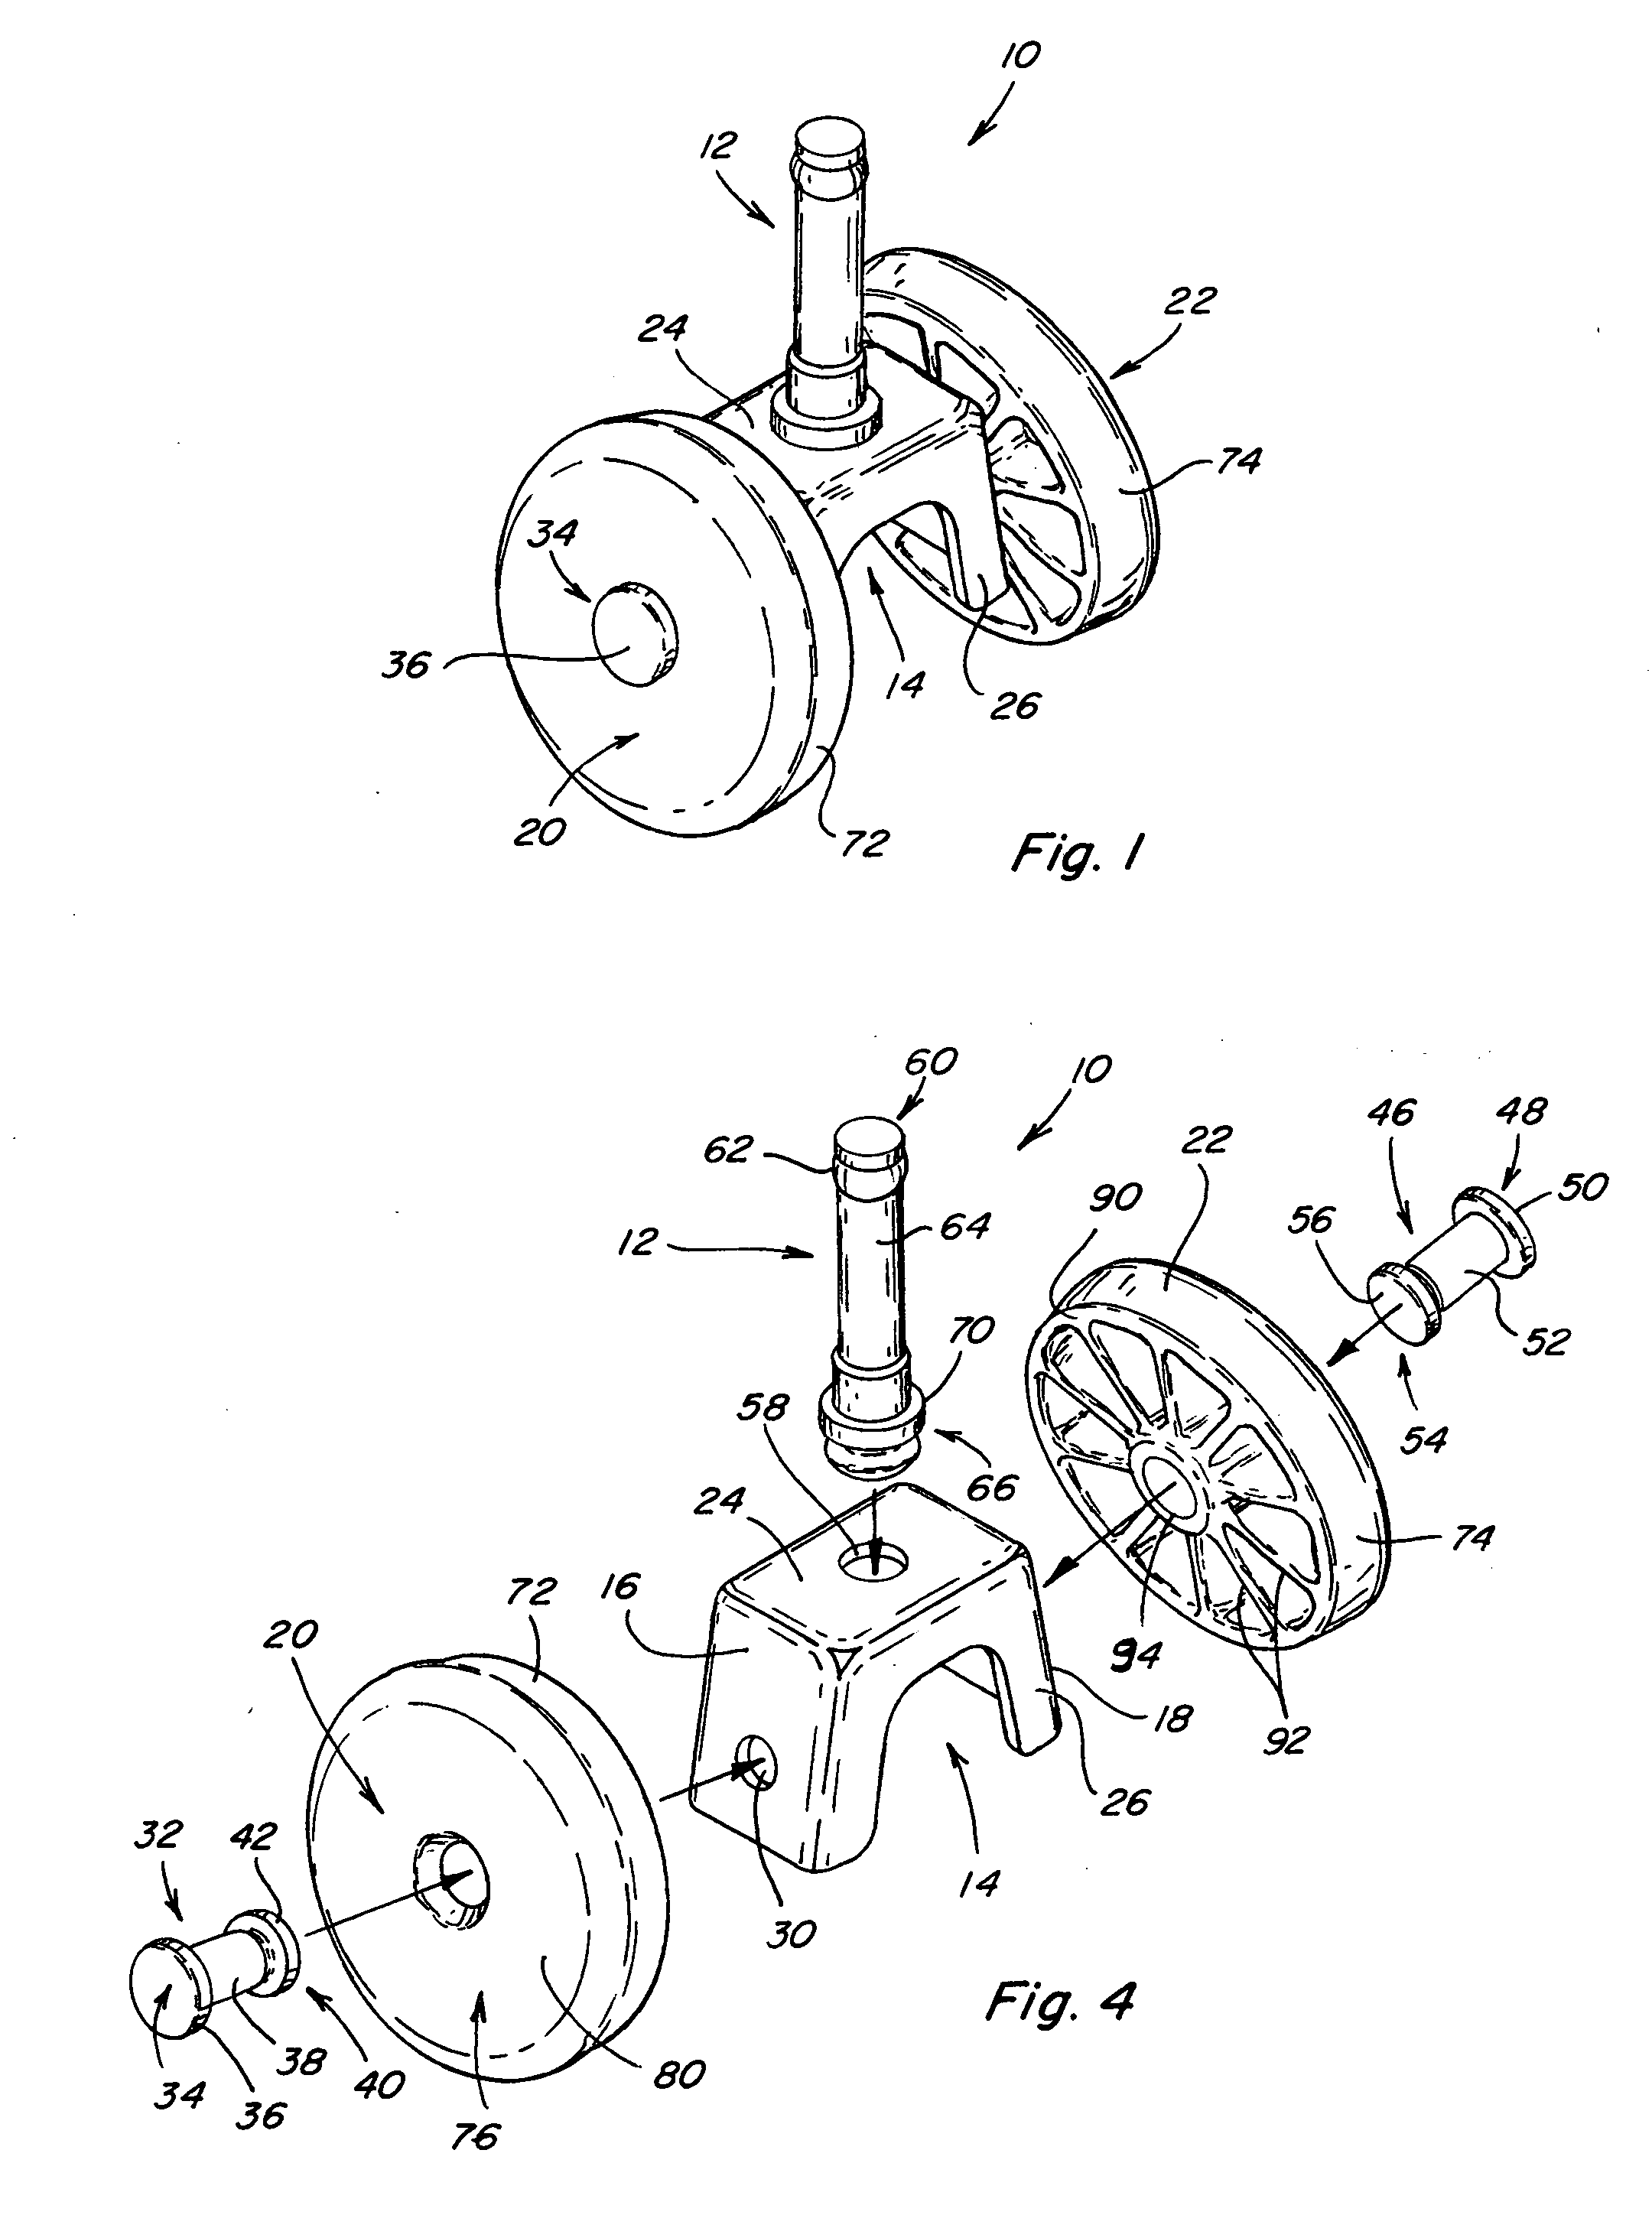 Dual wheel caster